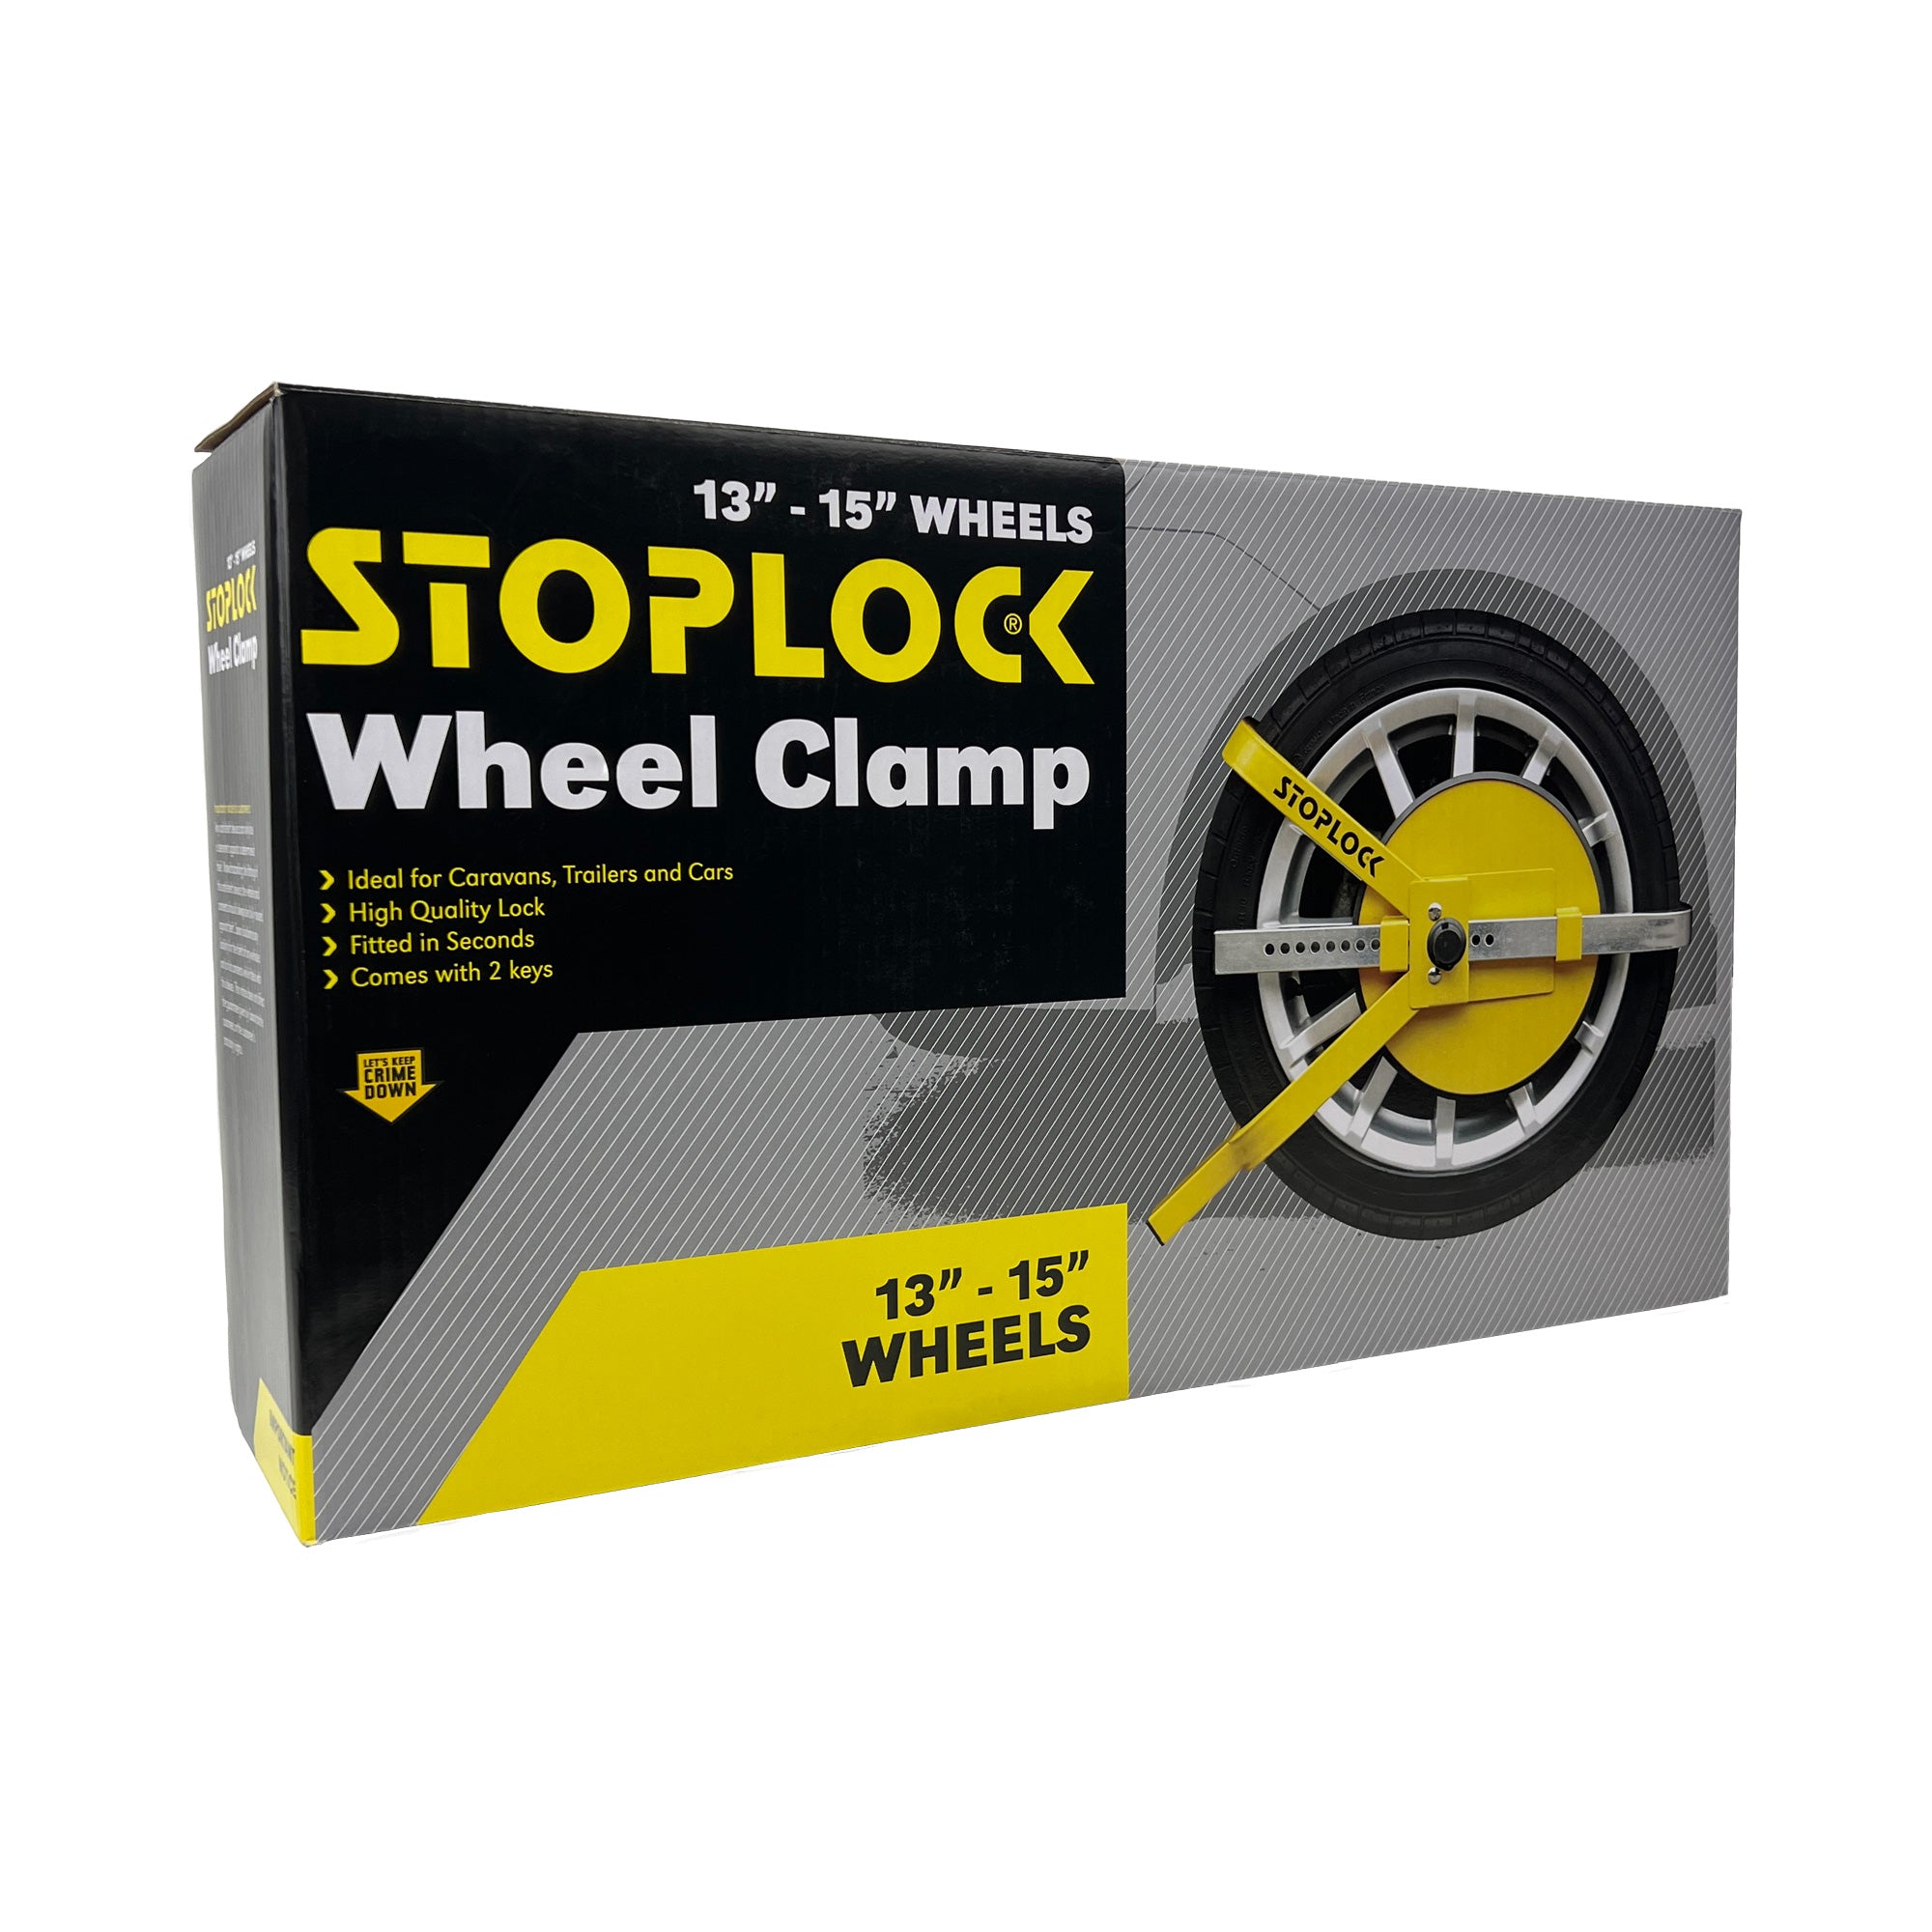 Stop Lock Wheel Clamp For 13-15" Wheels